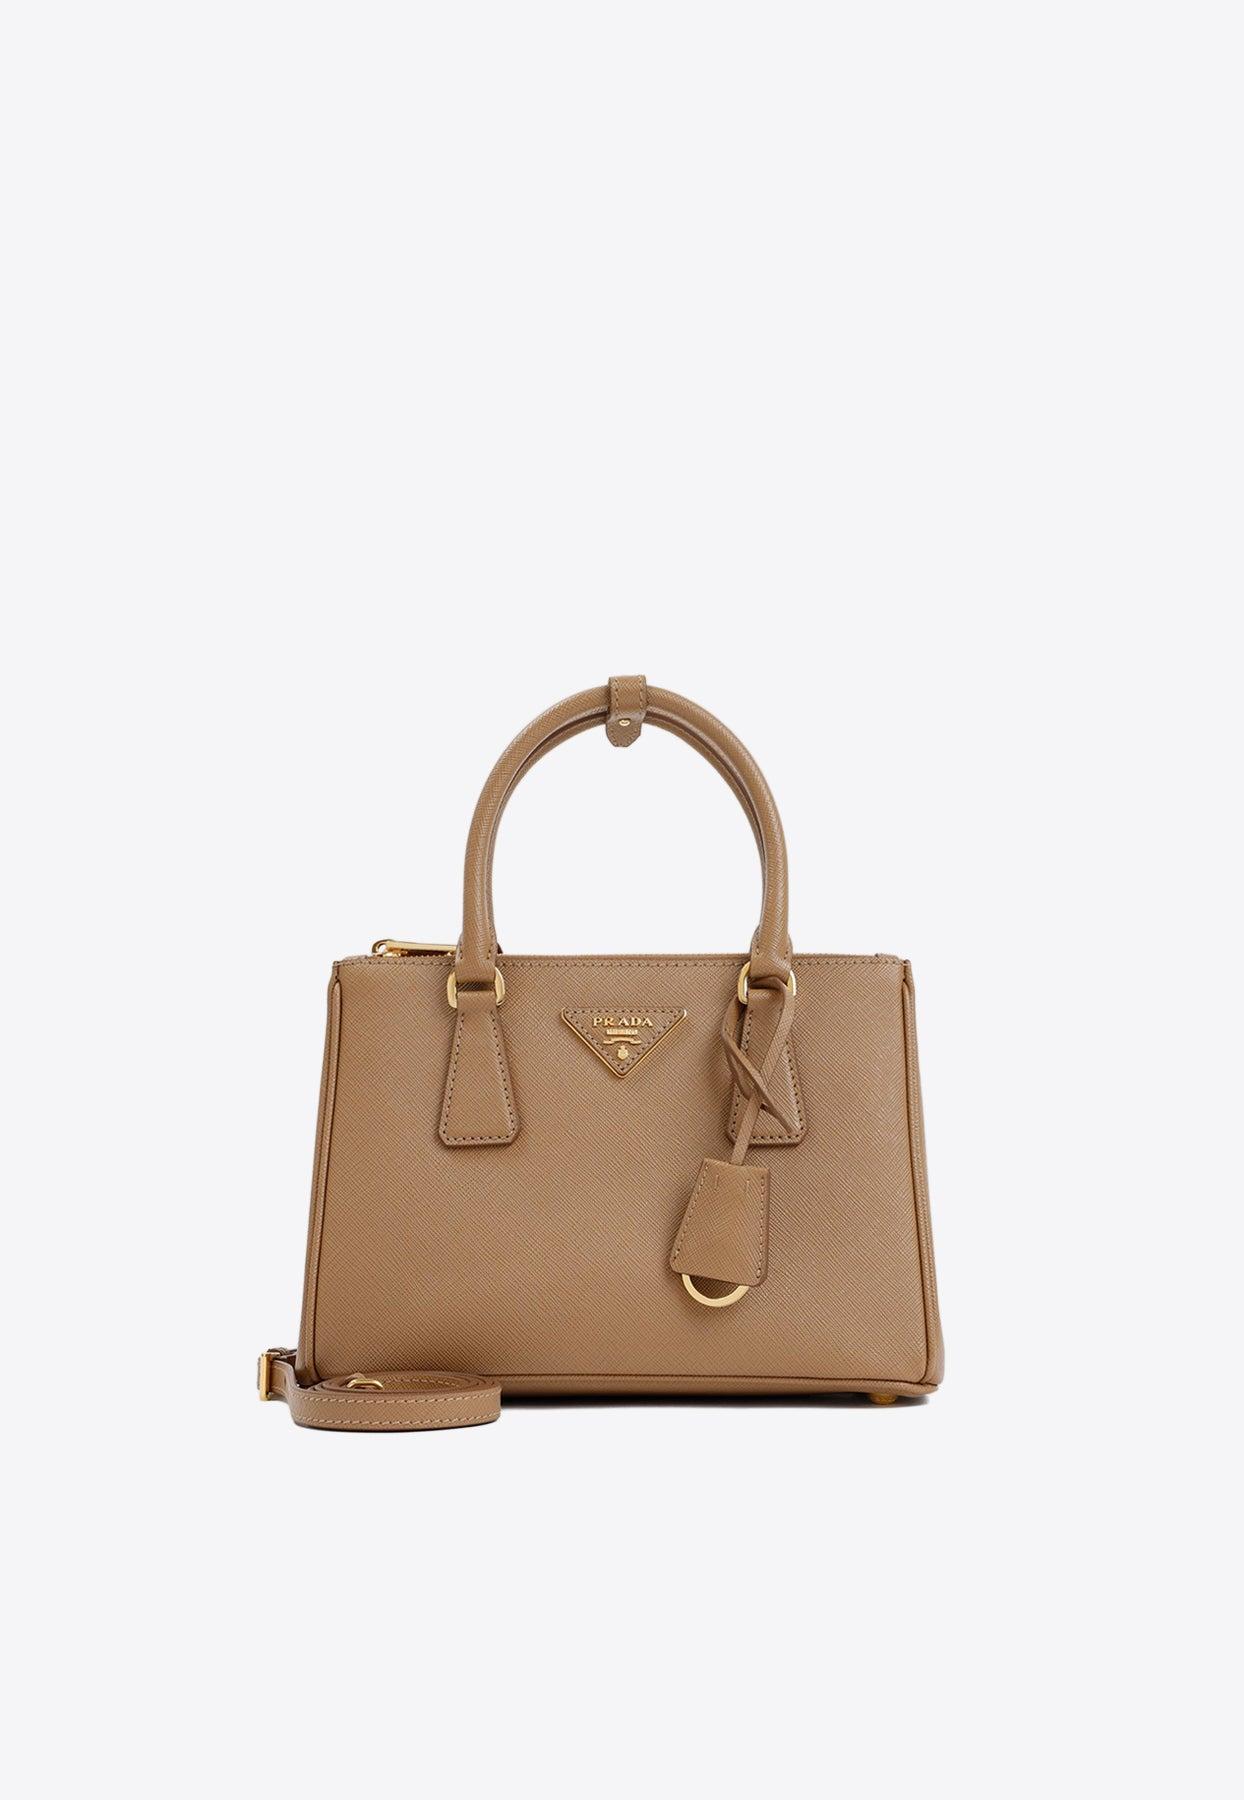 PRADA Galleria Saffiano Shoulder Bag Medium Beige color Leather